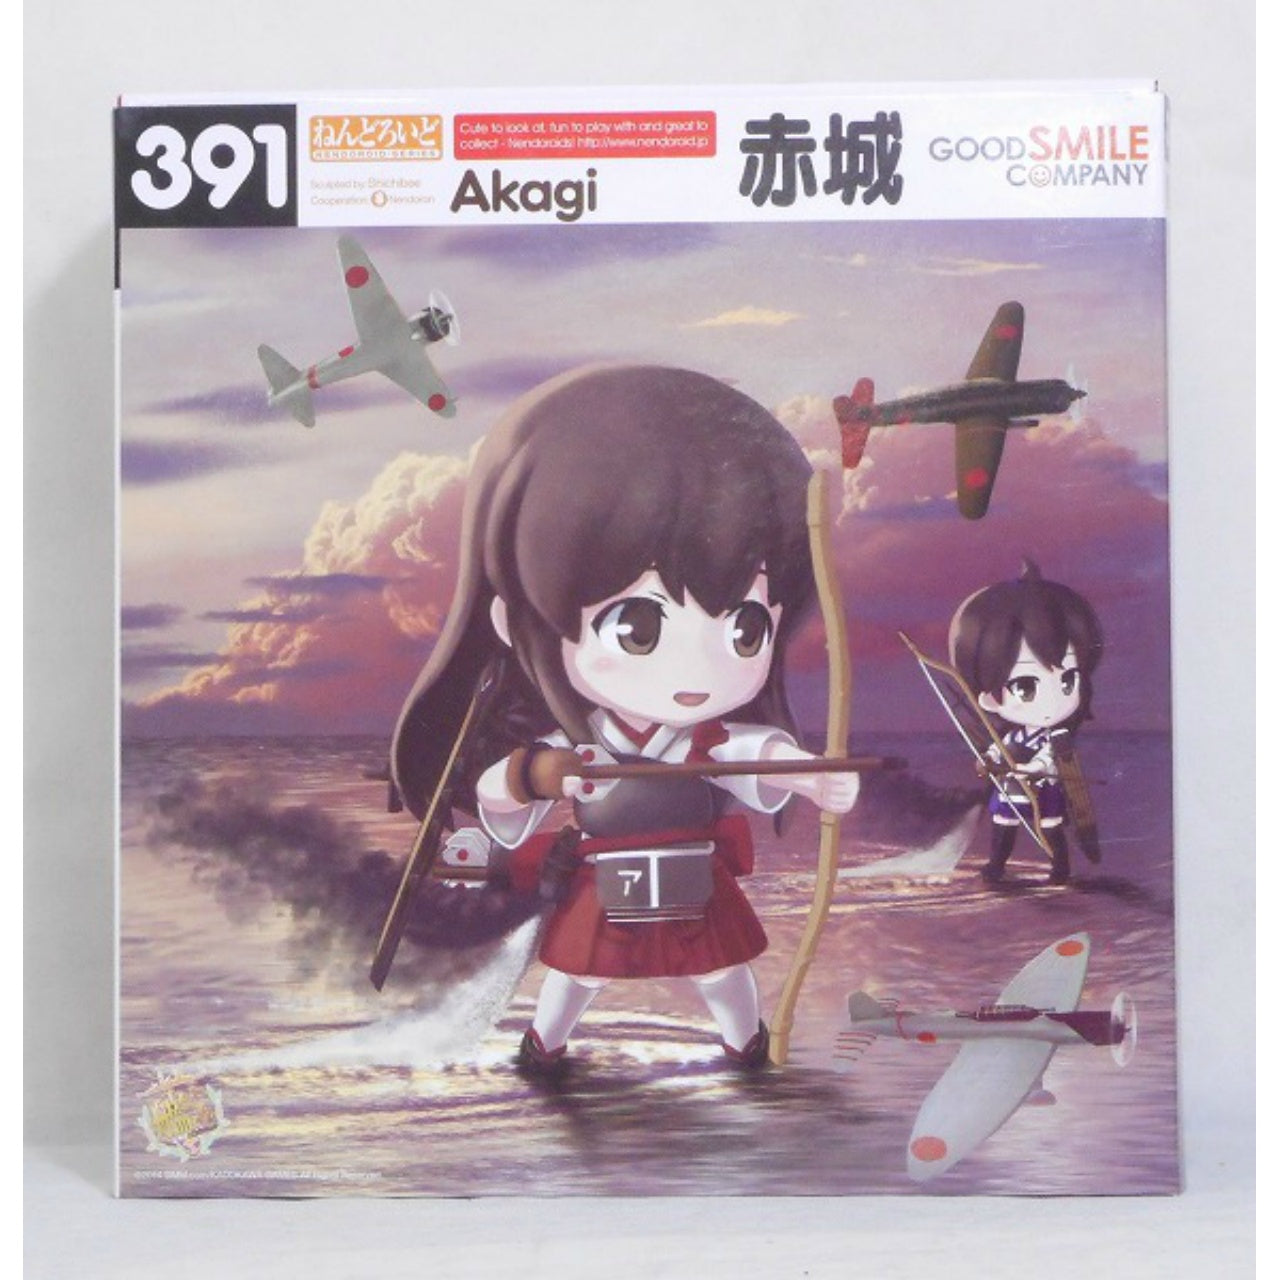 Nendoroid No.391 Akagi with Goodsmile Online Shop Bonus Item, animota